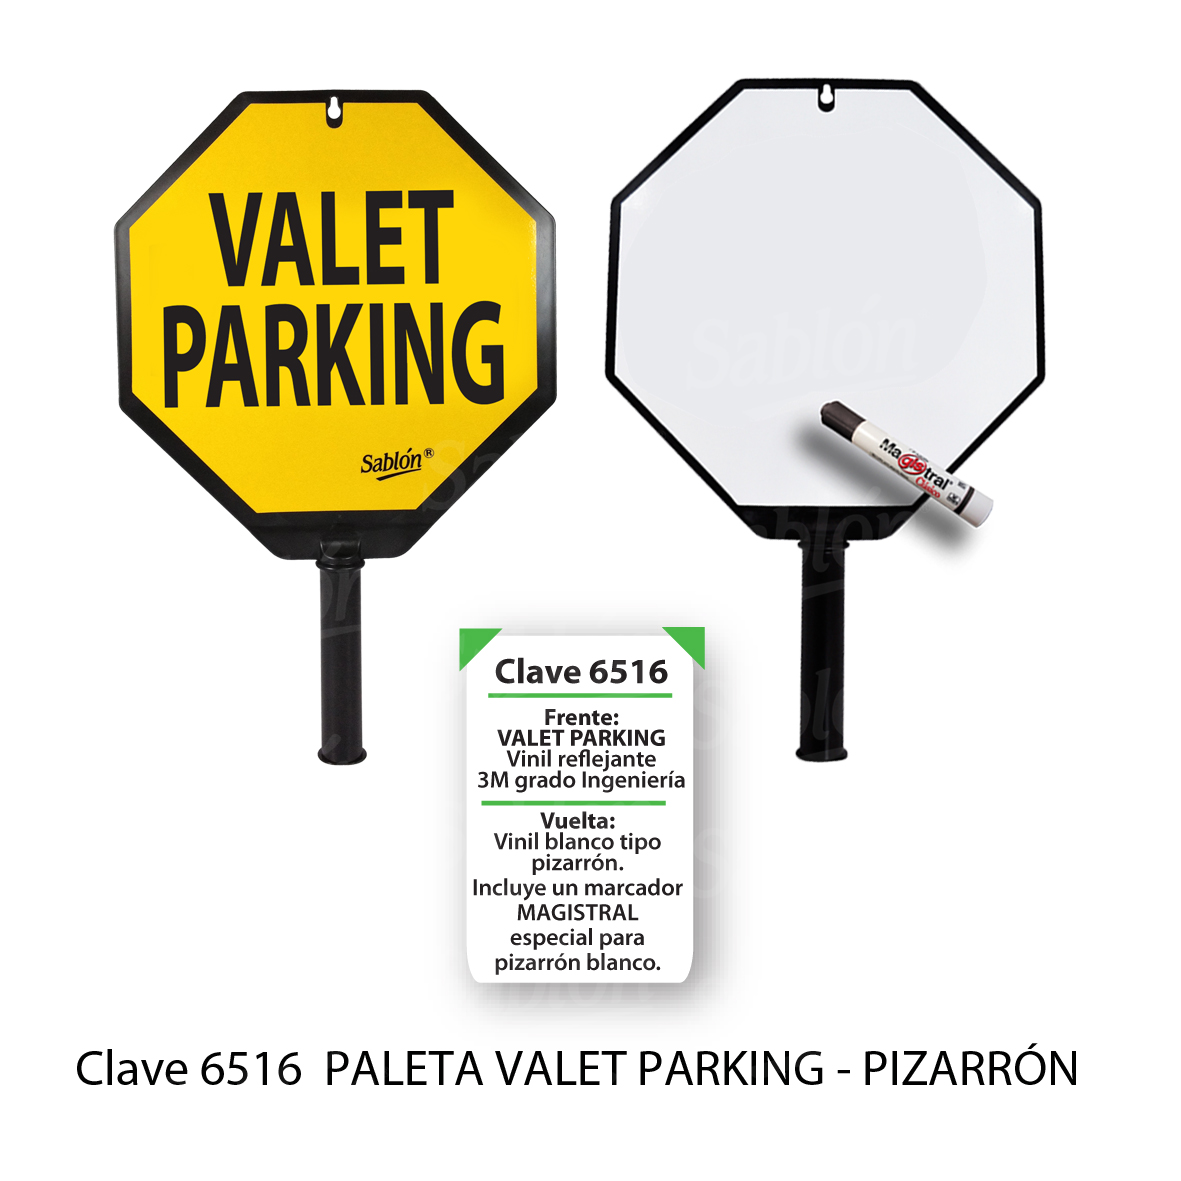 PALETA VALET PARKING- PIZARRON 6516